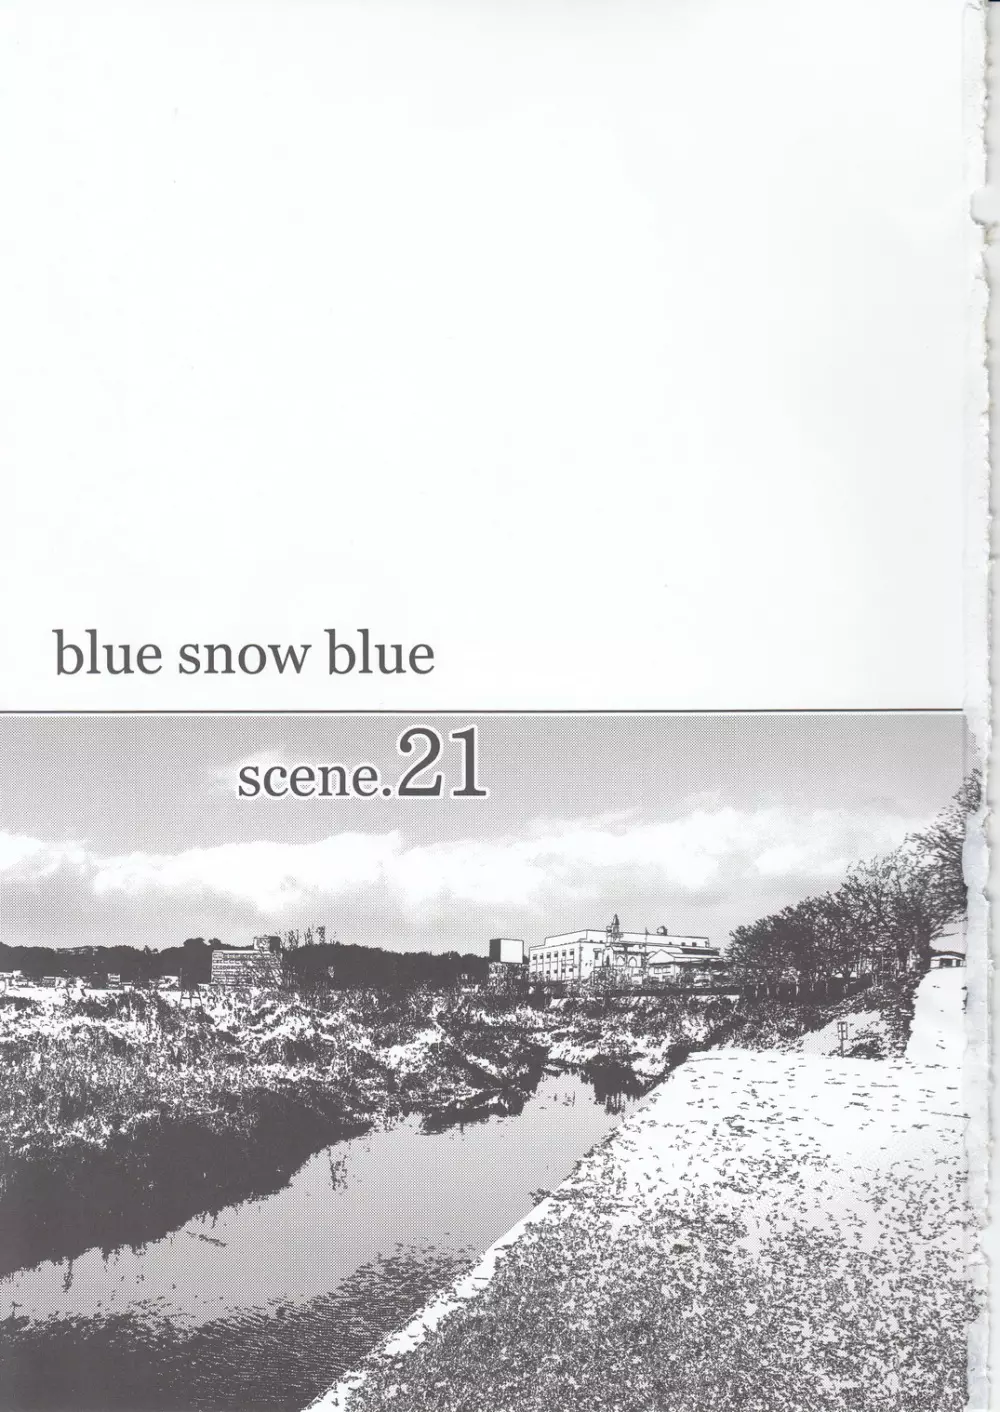 blue snow blue scene.21 - page3